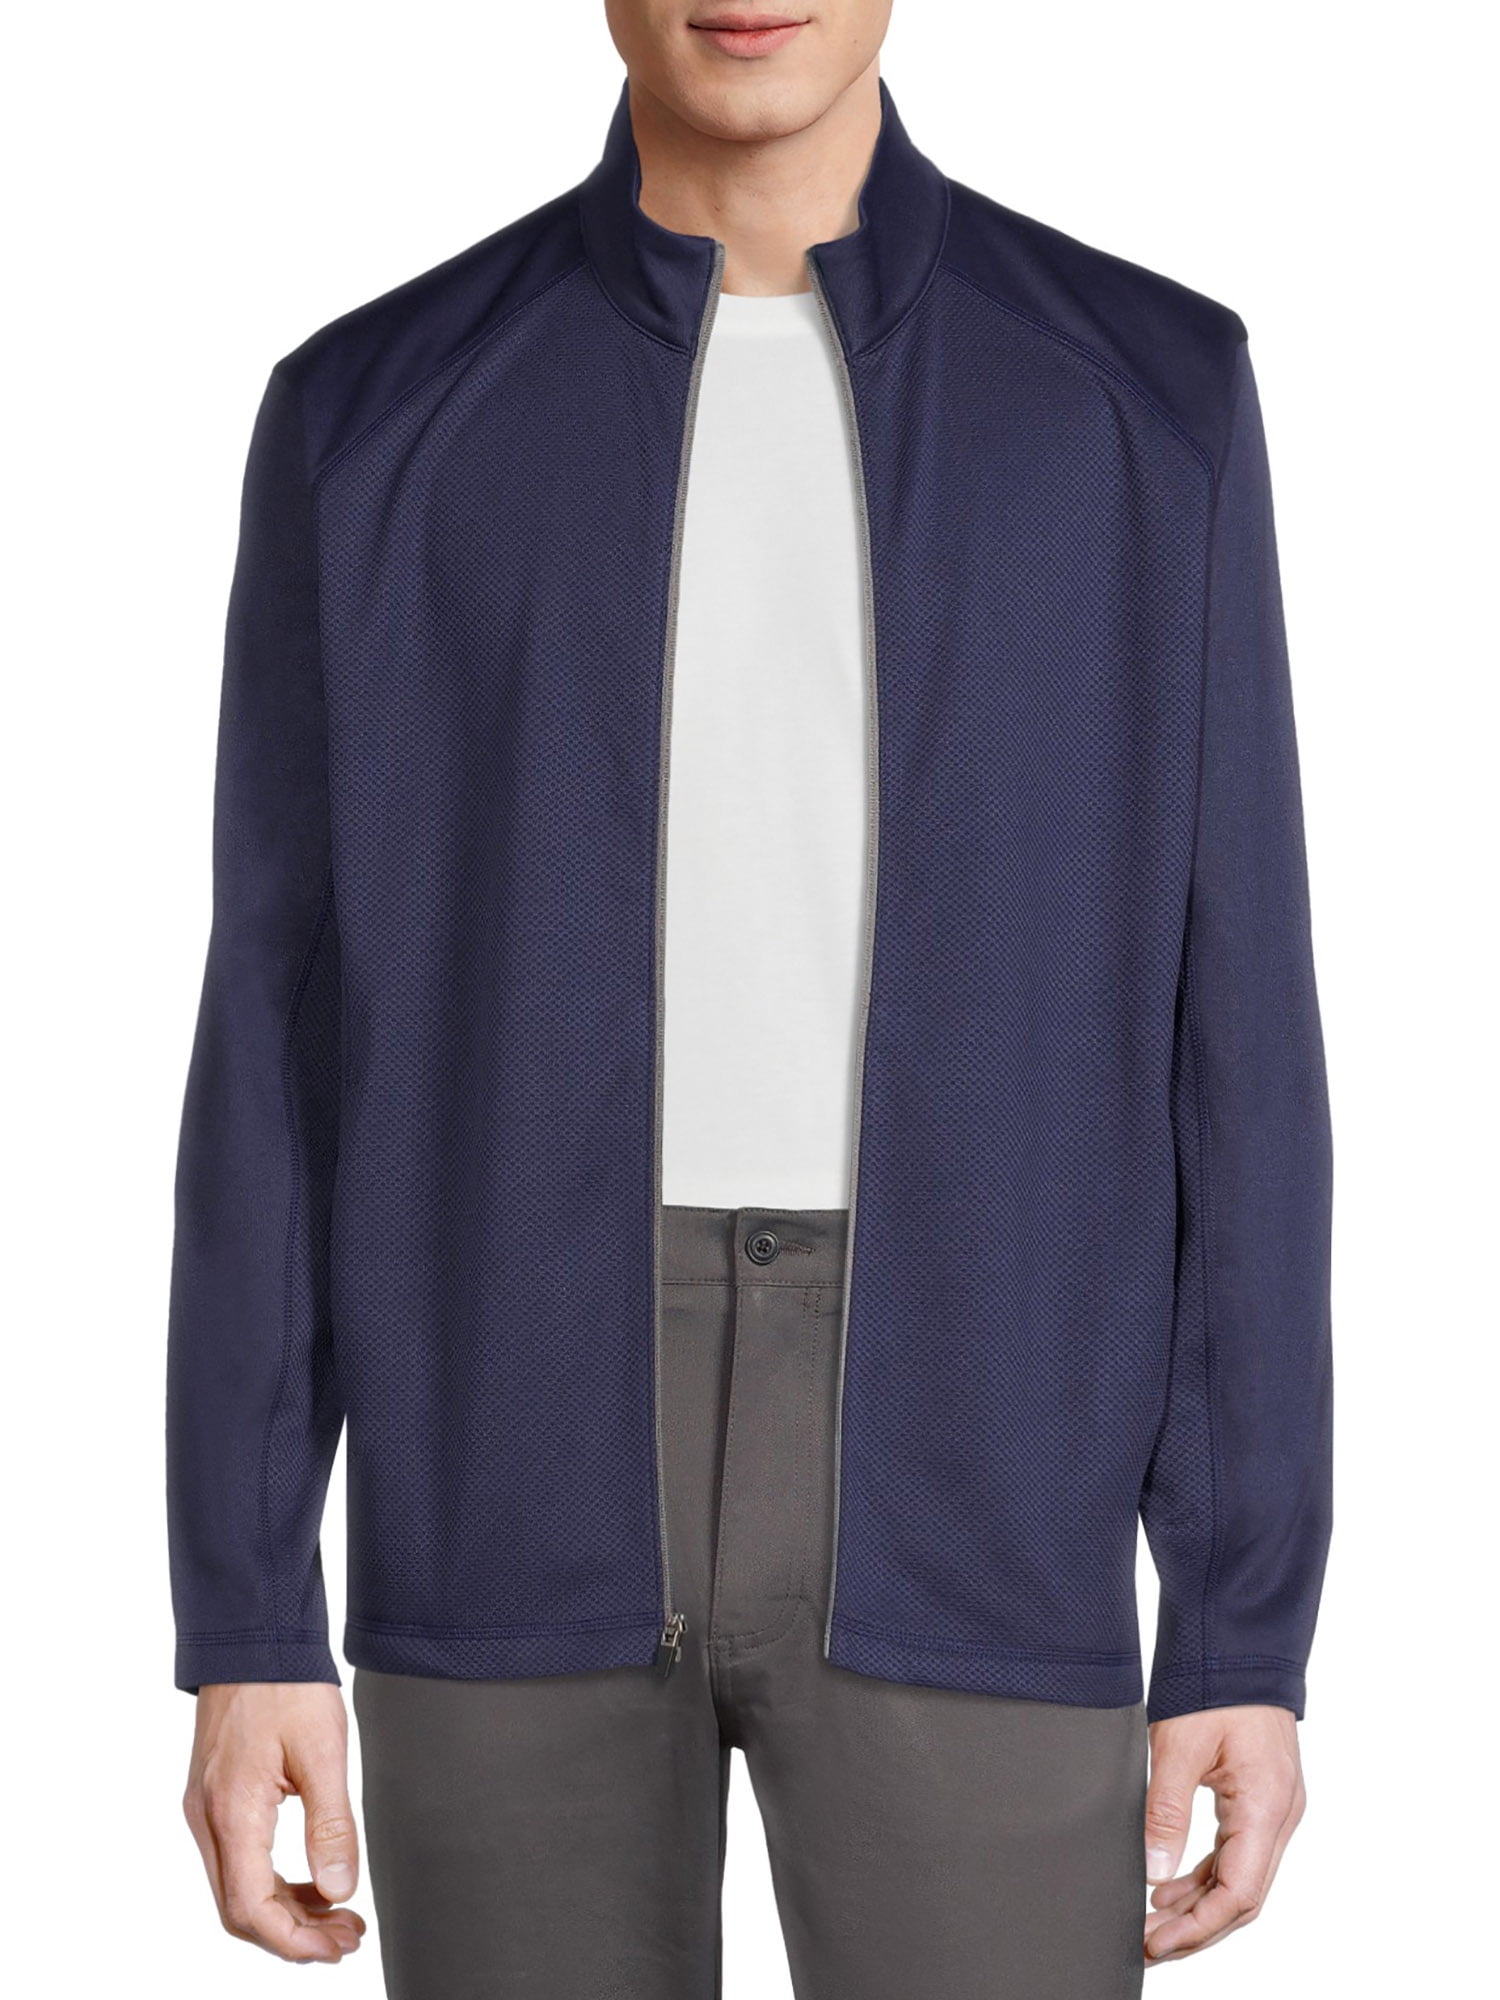 5XL Long Sleeve Zip or Pullover Baseball Wind Shirt Jacket Rawlings Men's S-4XL 